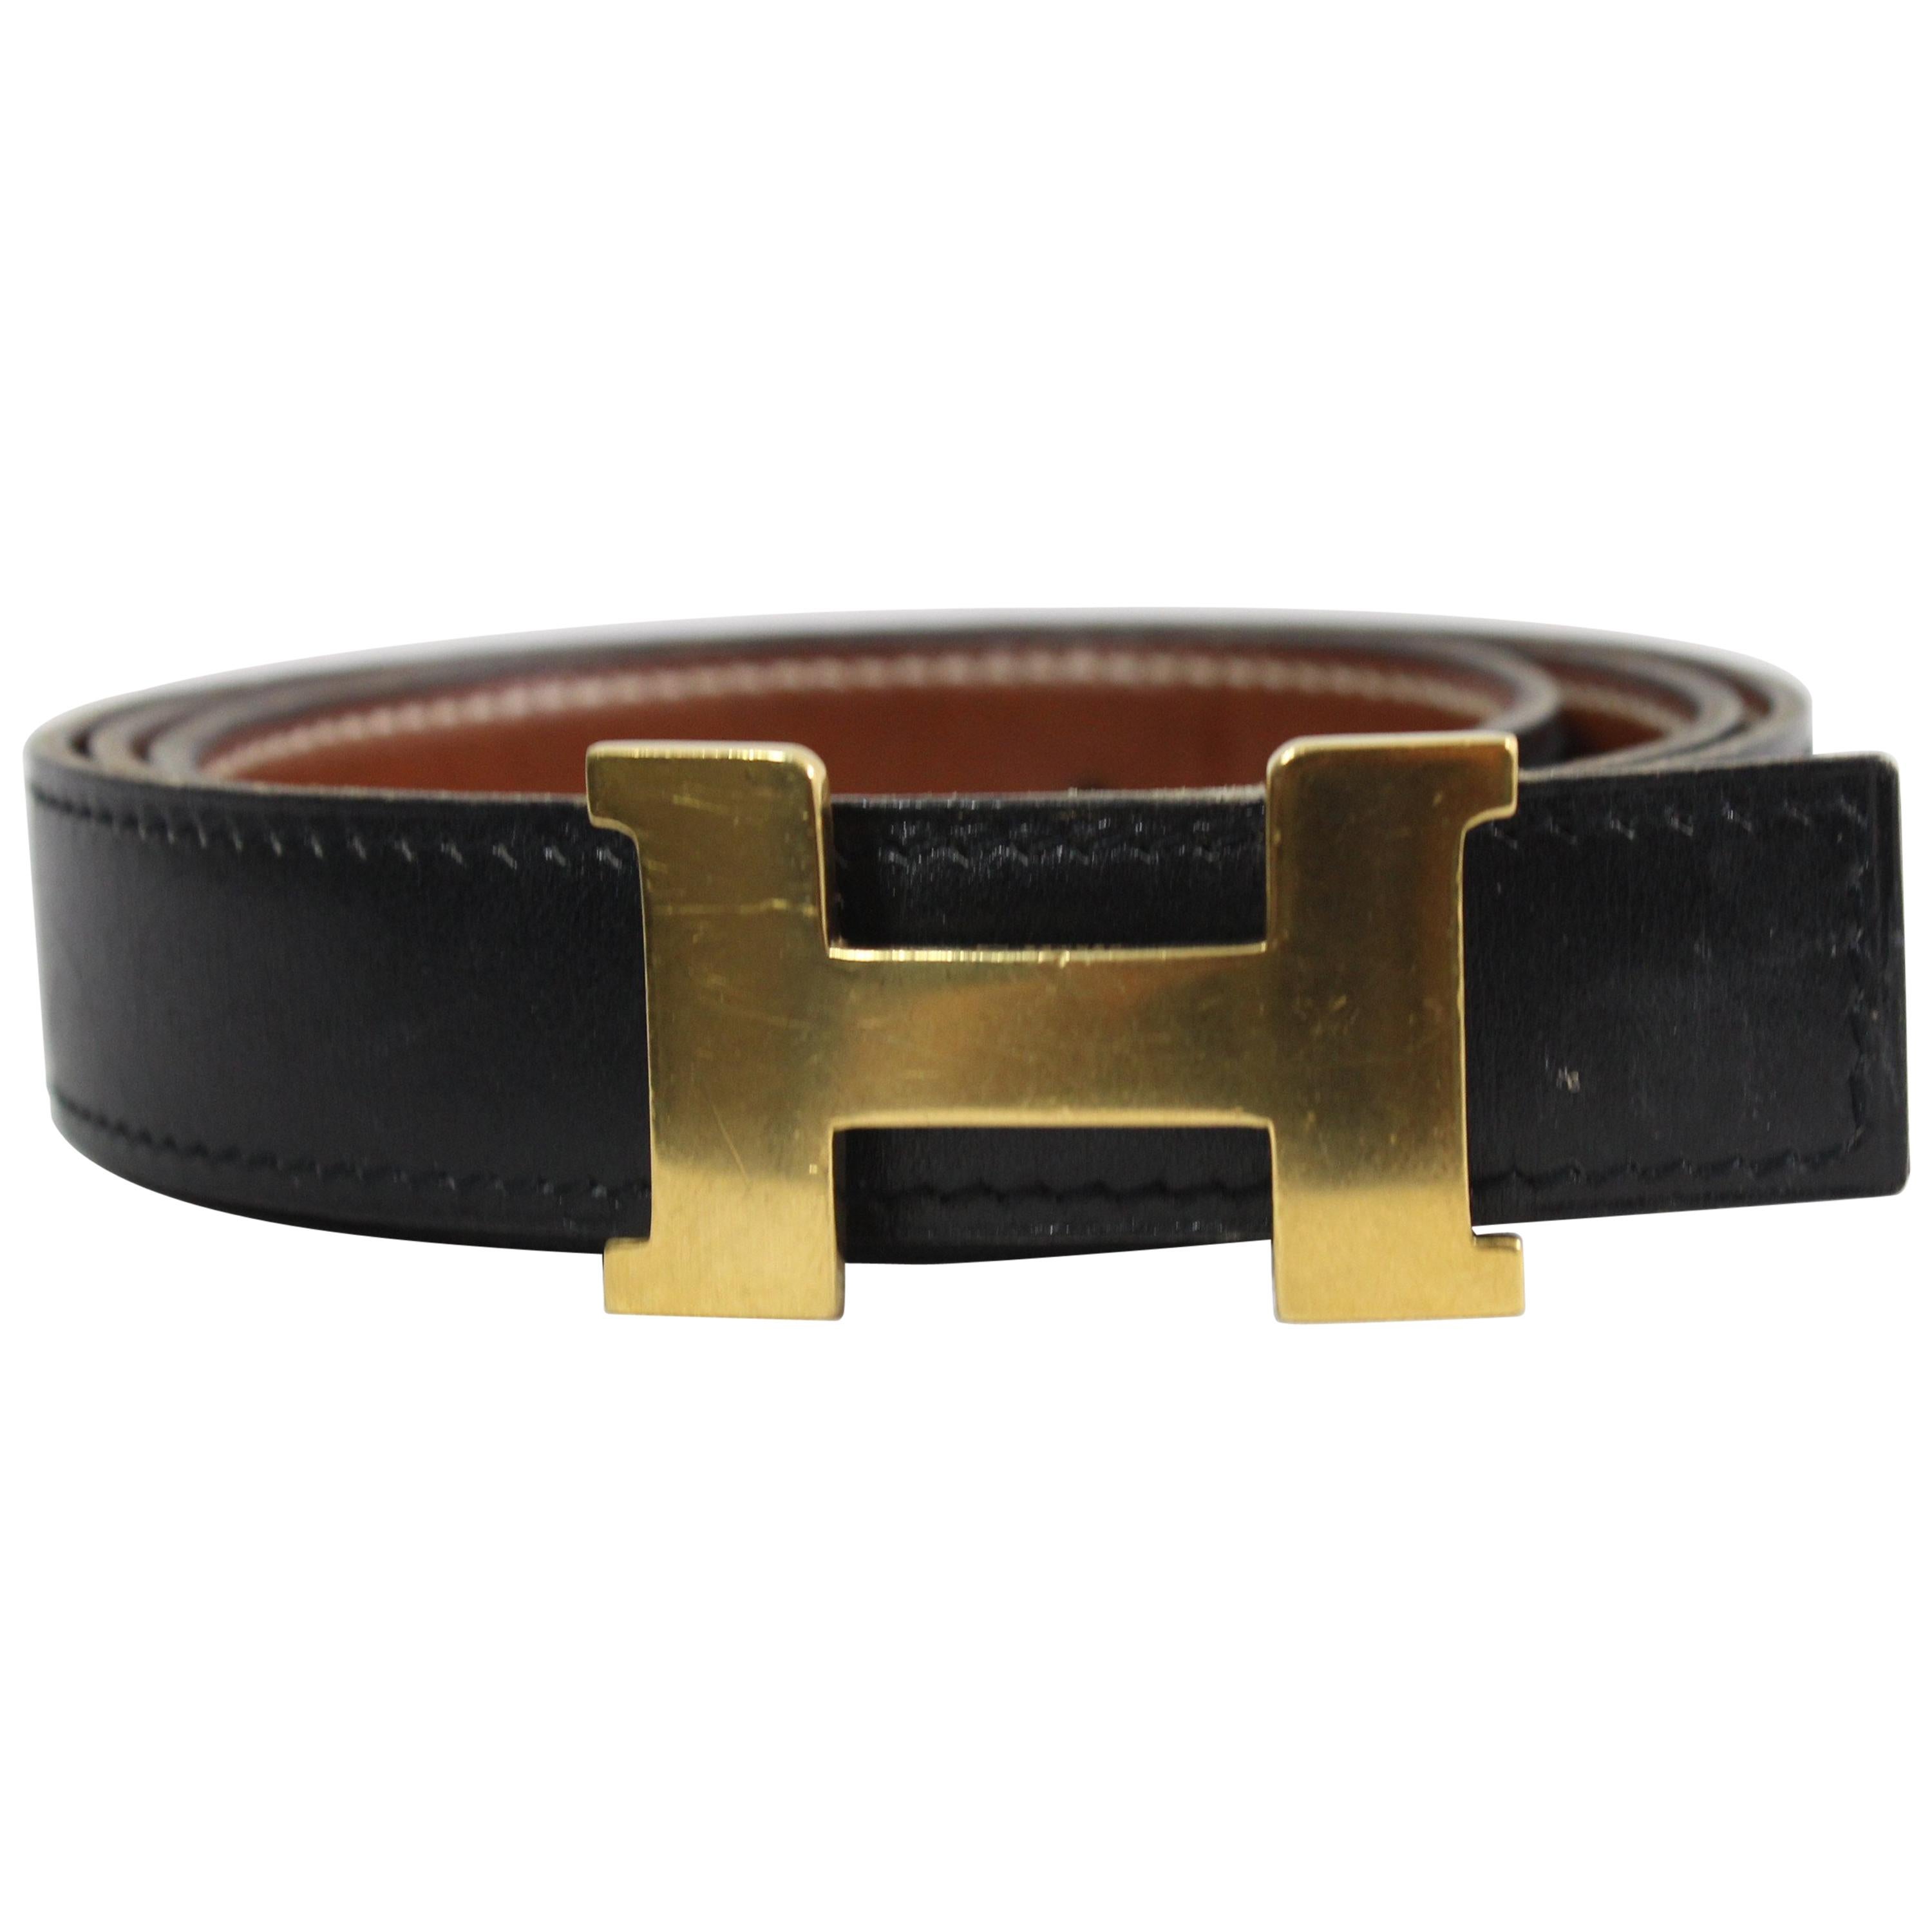 Hermes reversible H Constance Black and Gold Leather Belt. Size 84 cm